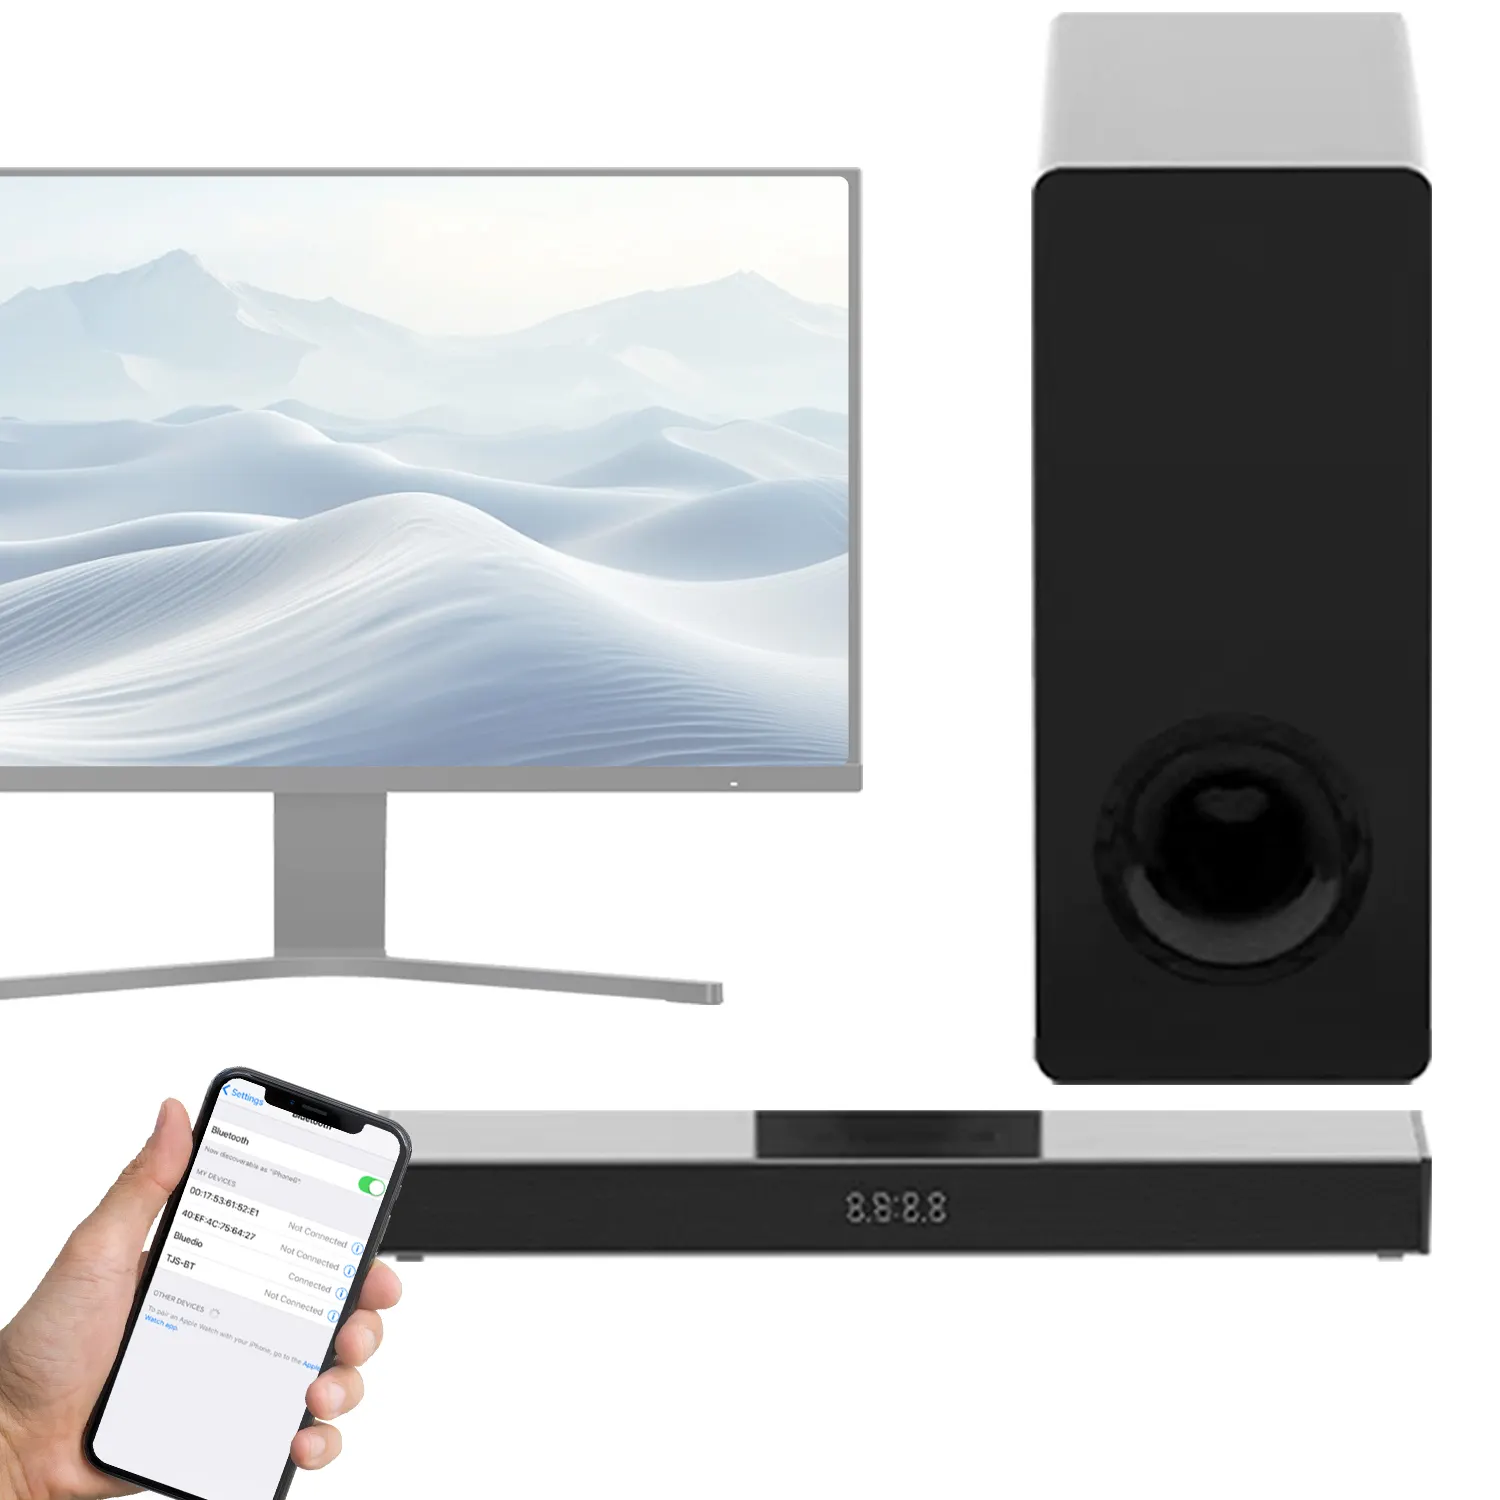 Toptan fiyat süper bas kablosuz Bluetooth soundbar'da ev sinema sistemi ses çubukları Surround ses ile TV ses hoparlör